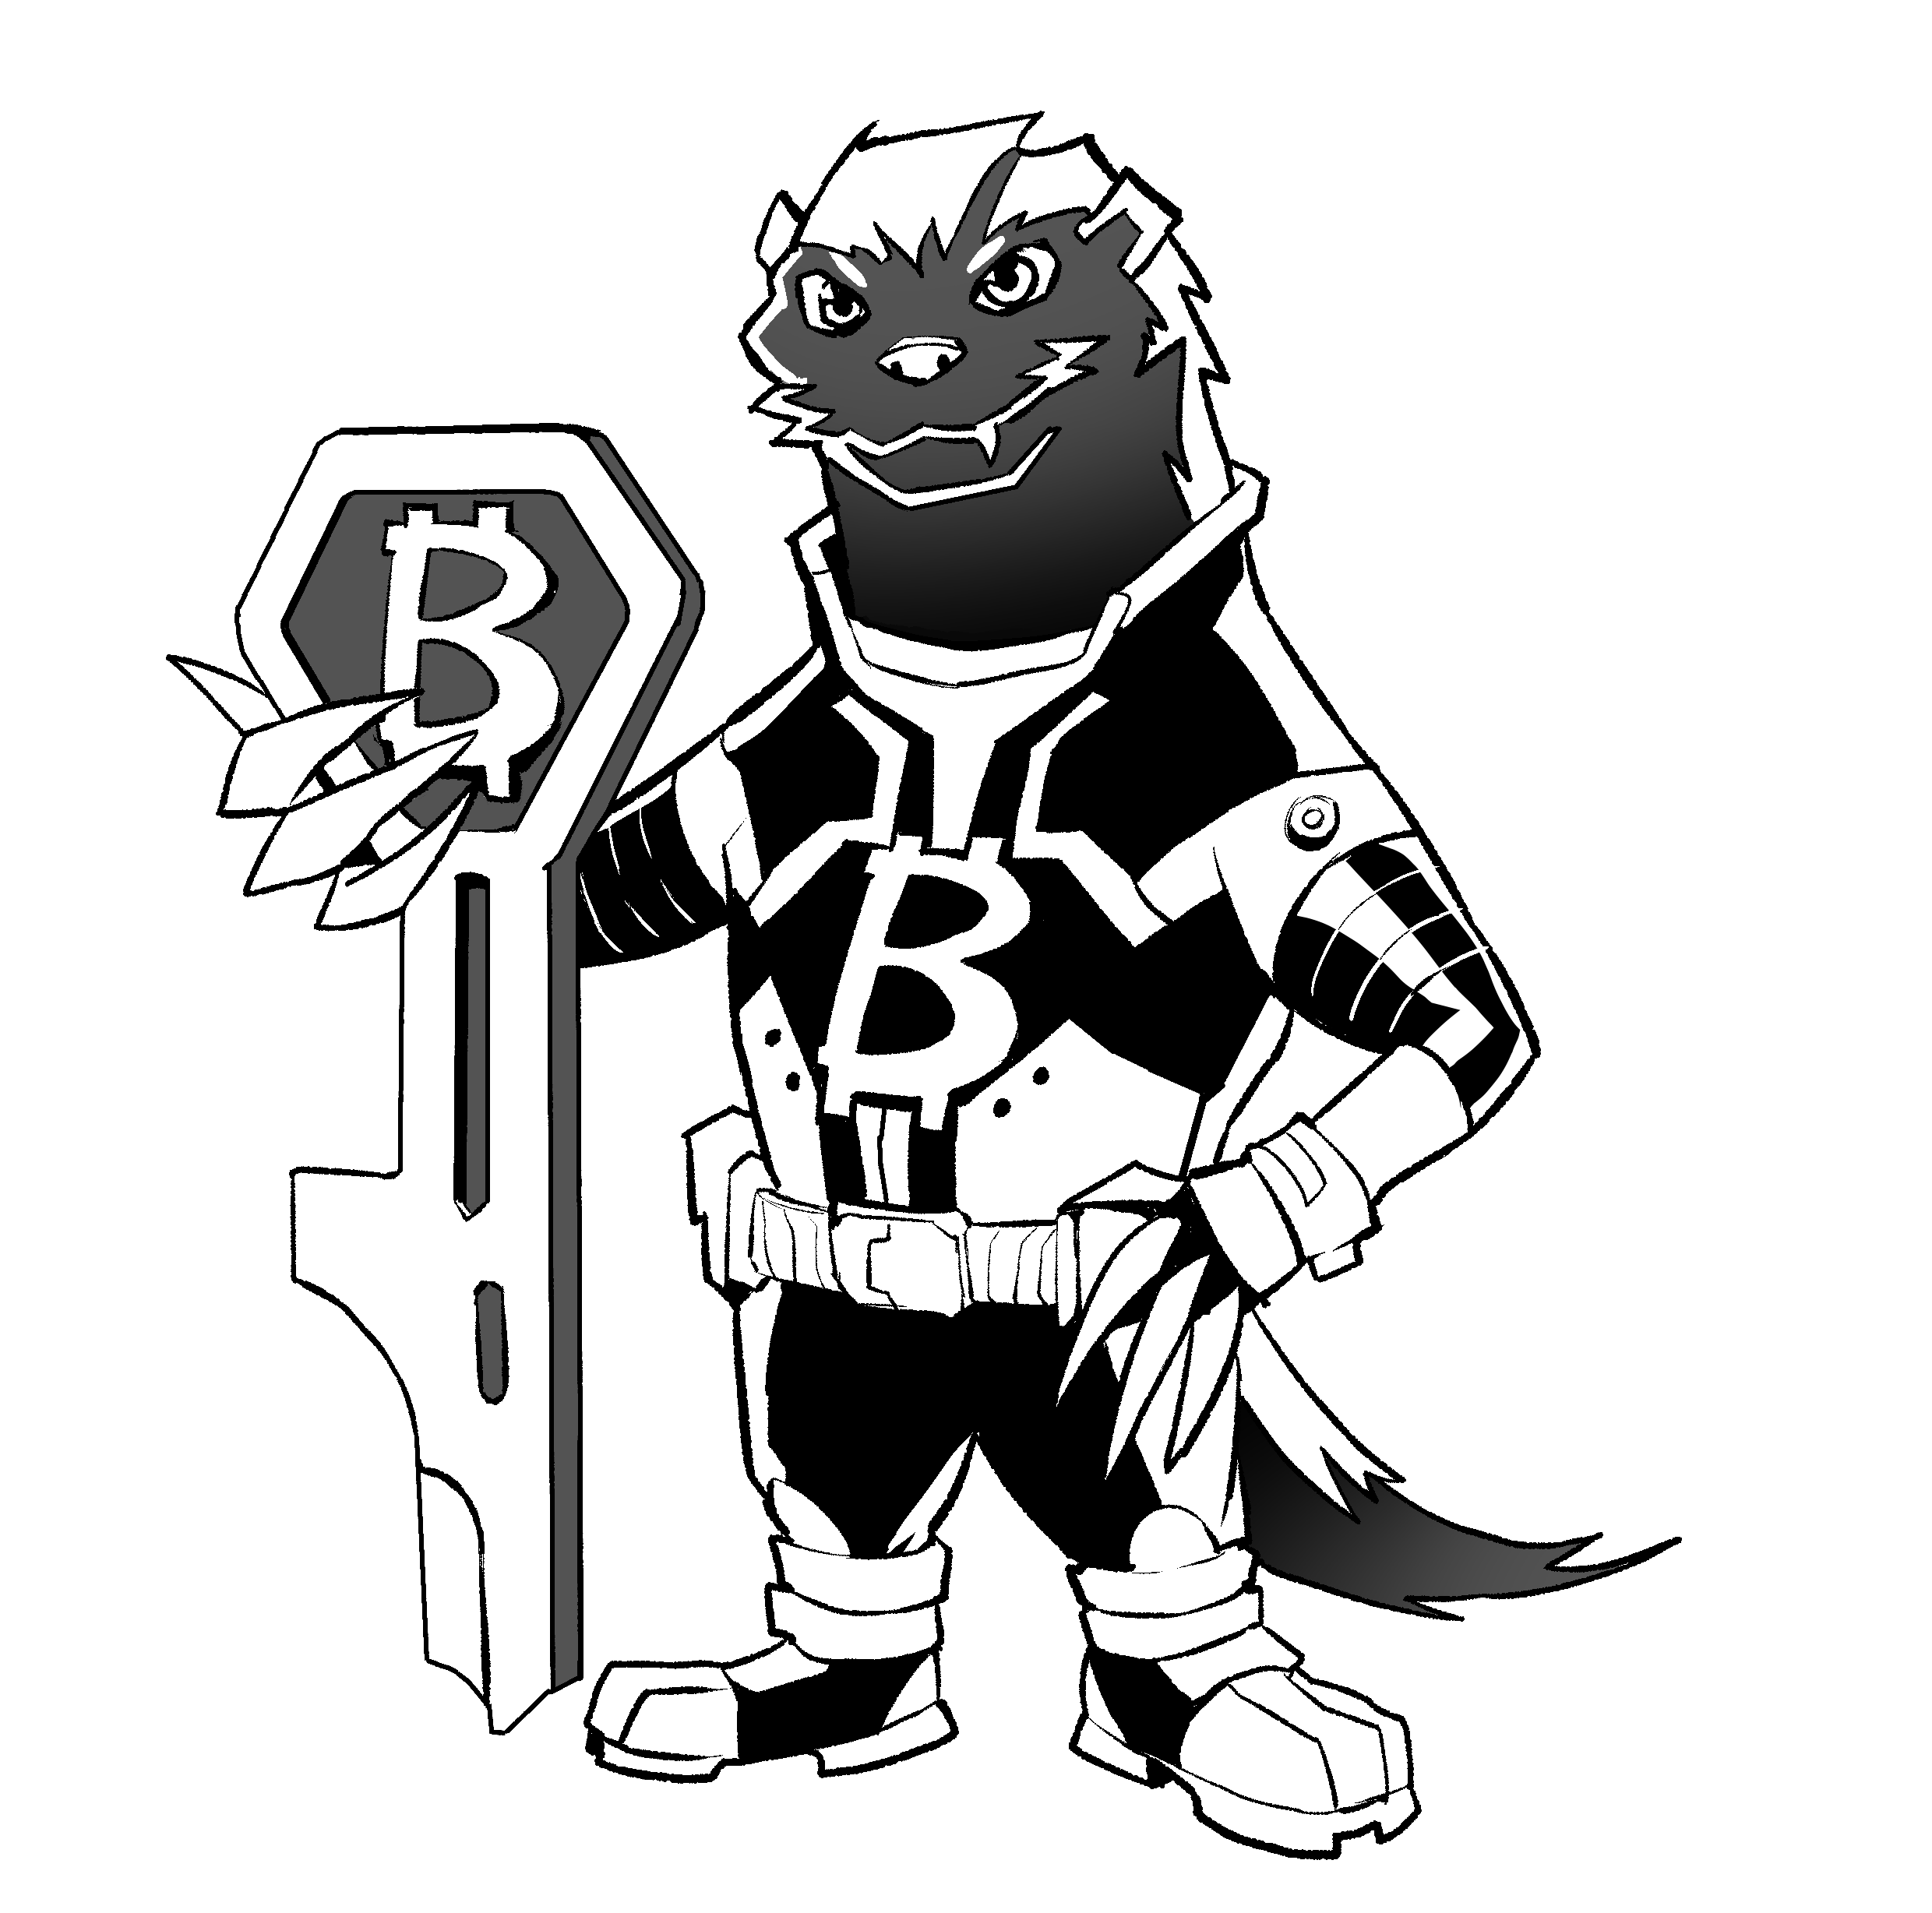 Mutant Bitcoin Money Badger